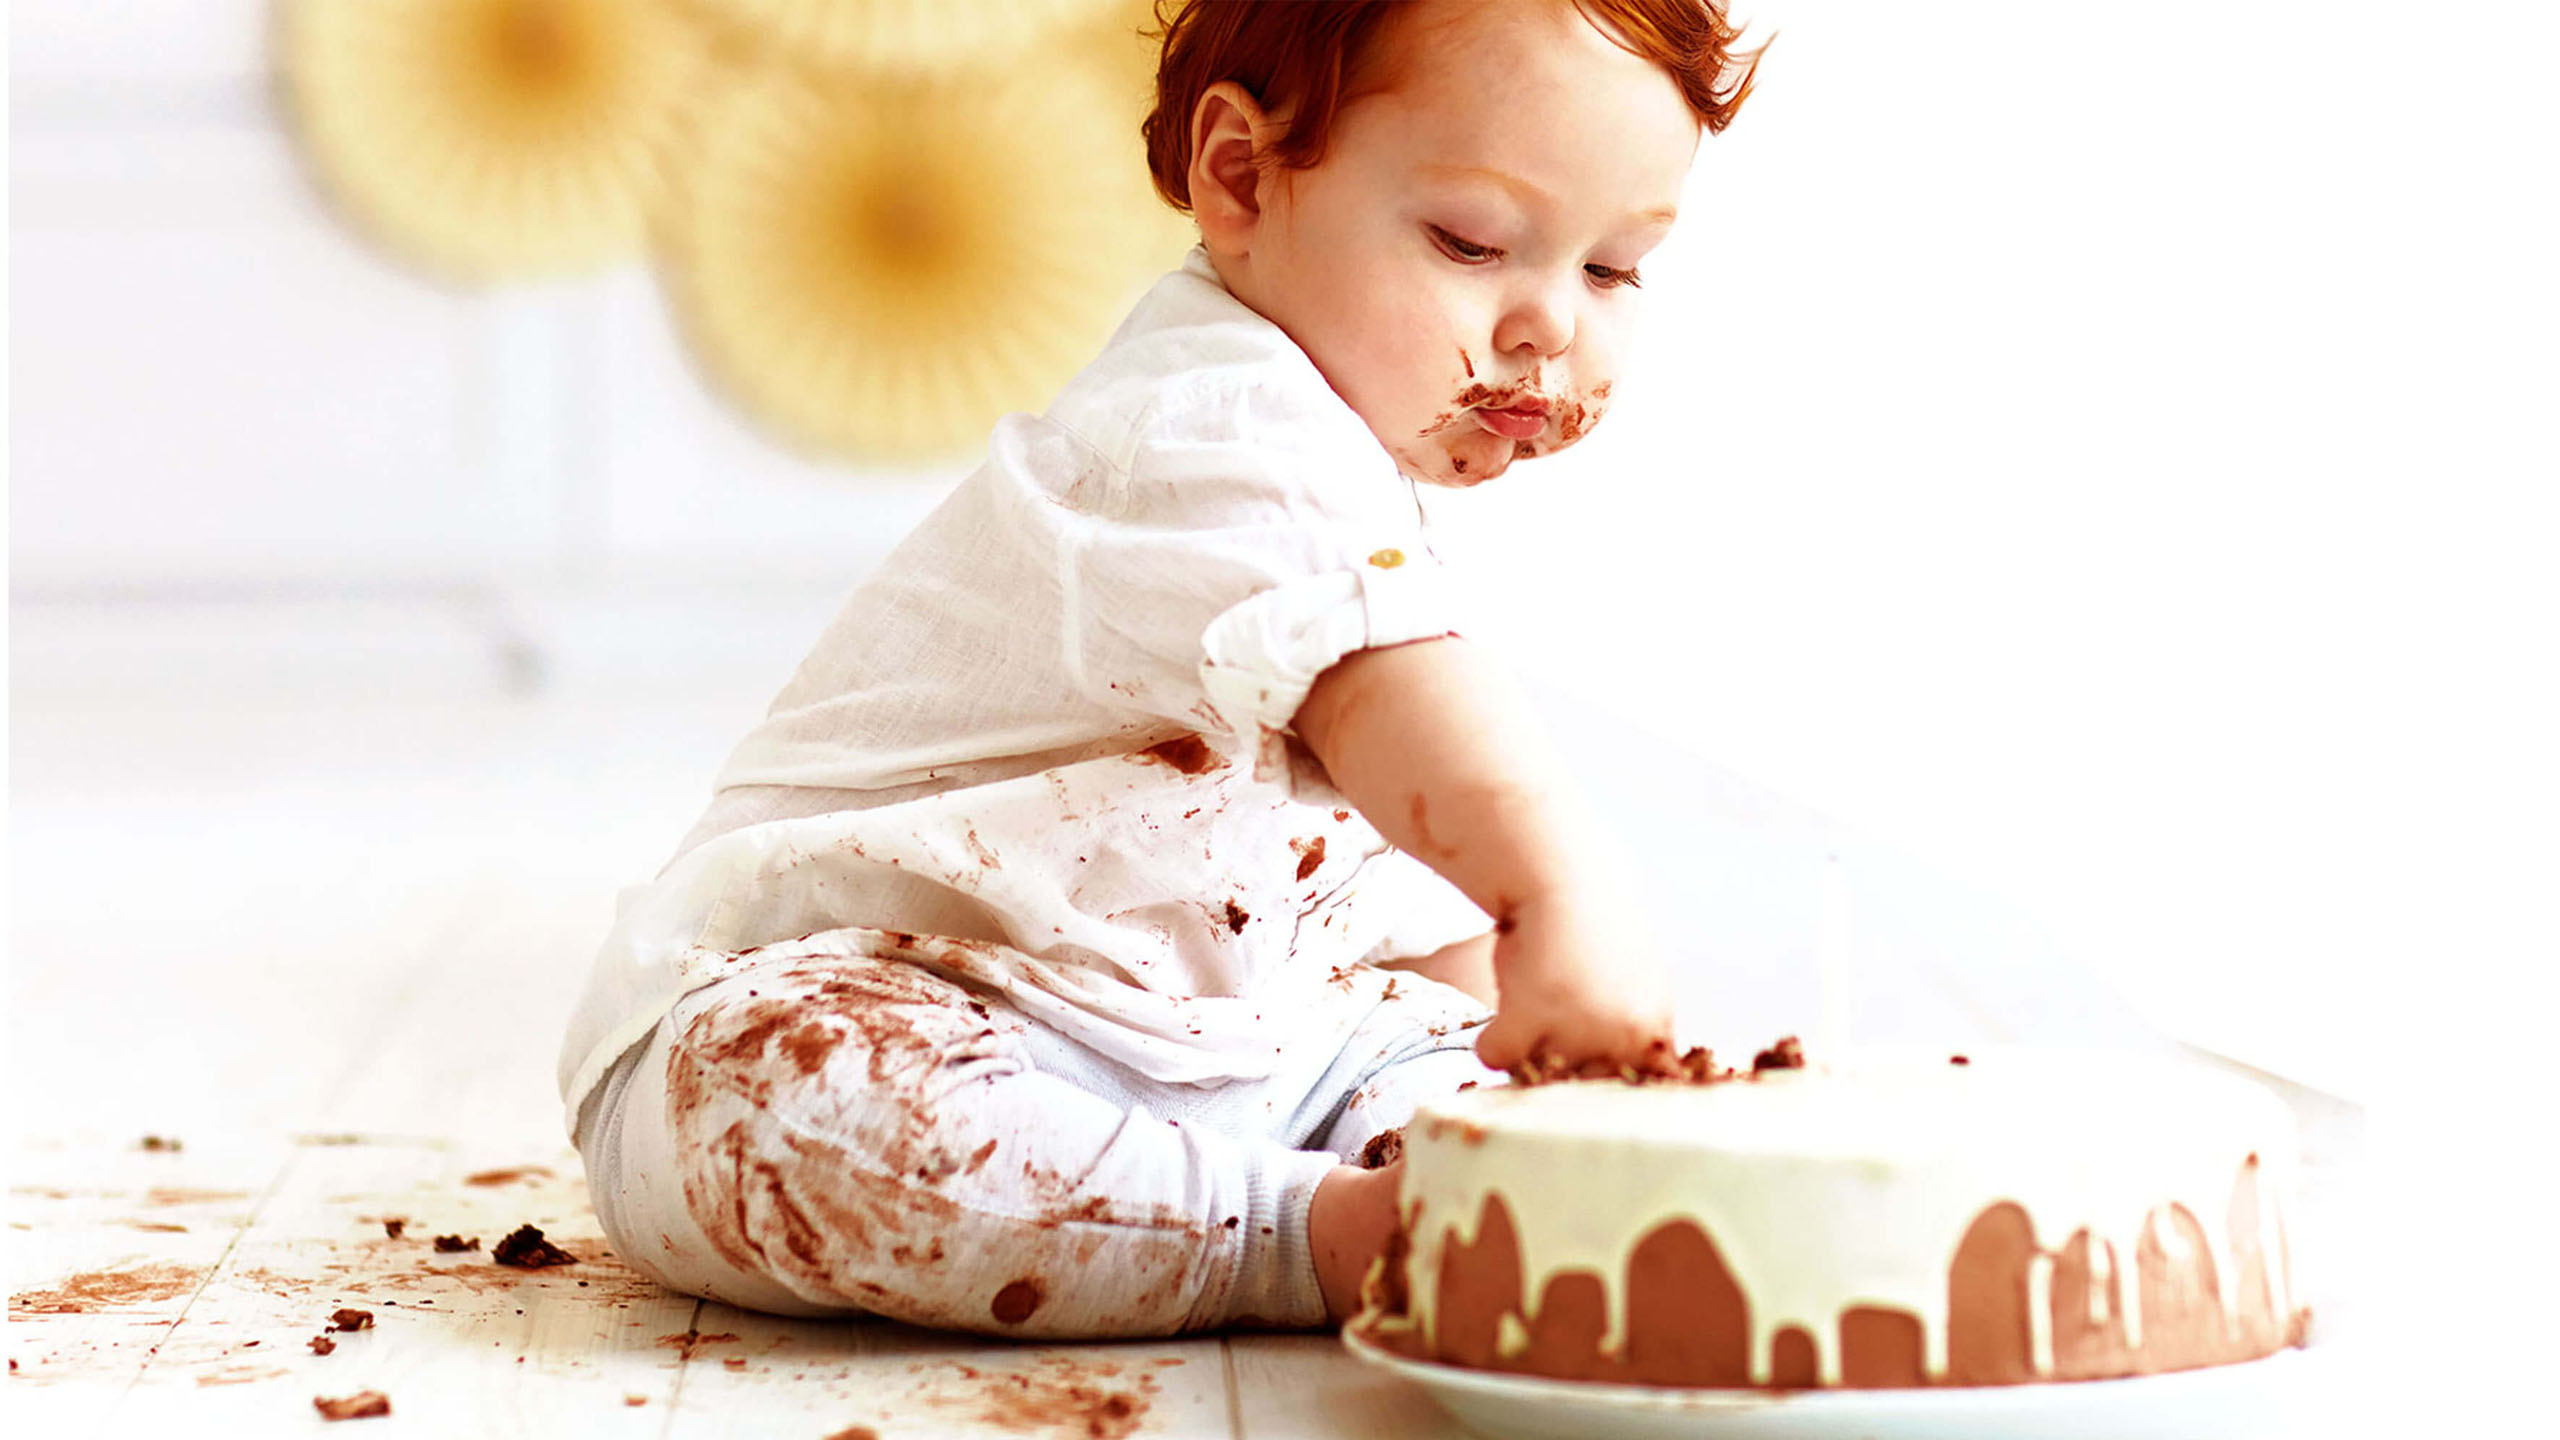 Harrisburg Baby Photographer Shares Tips for Cake Smash Portraits